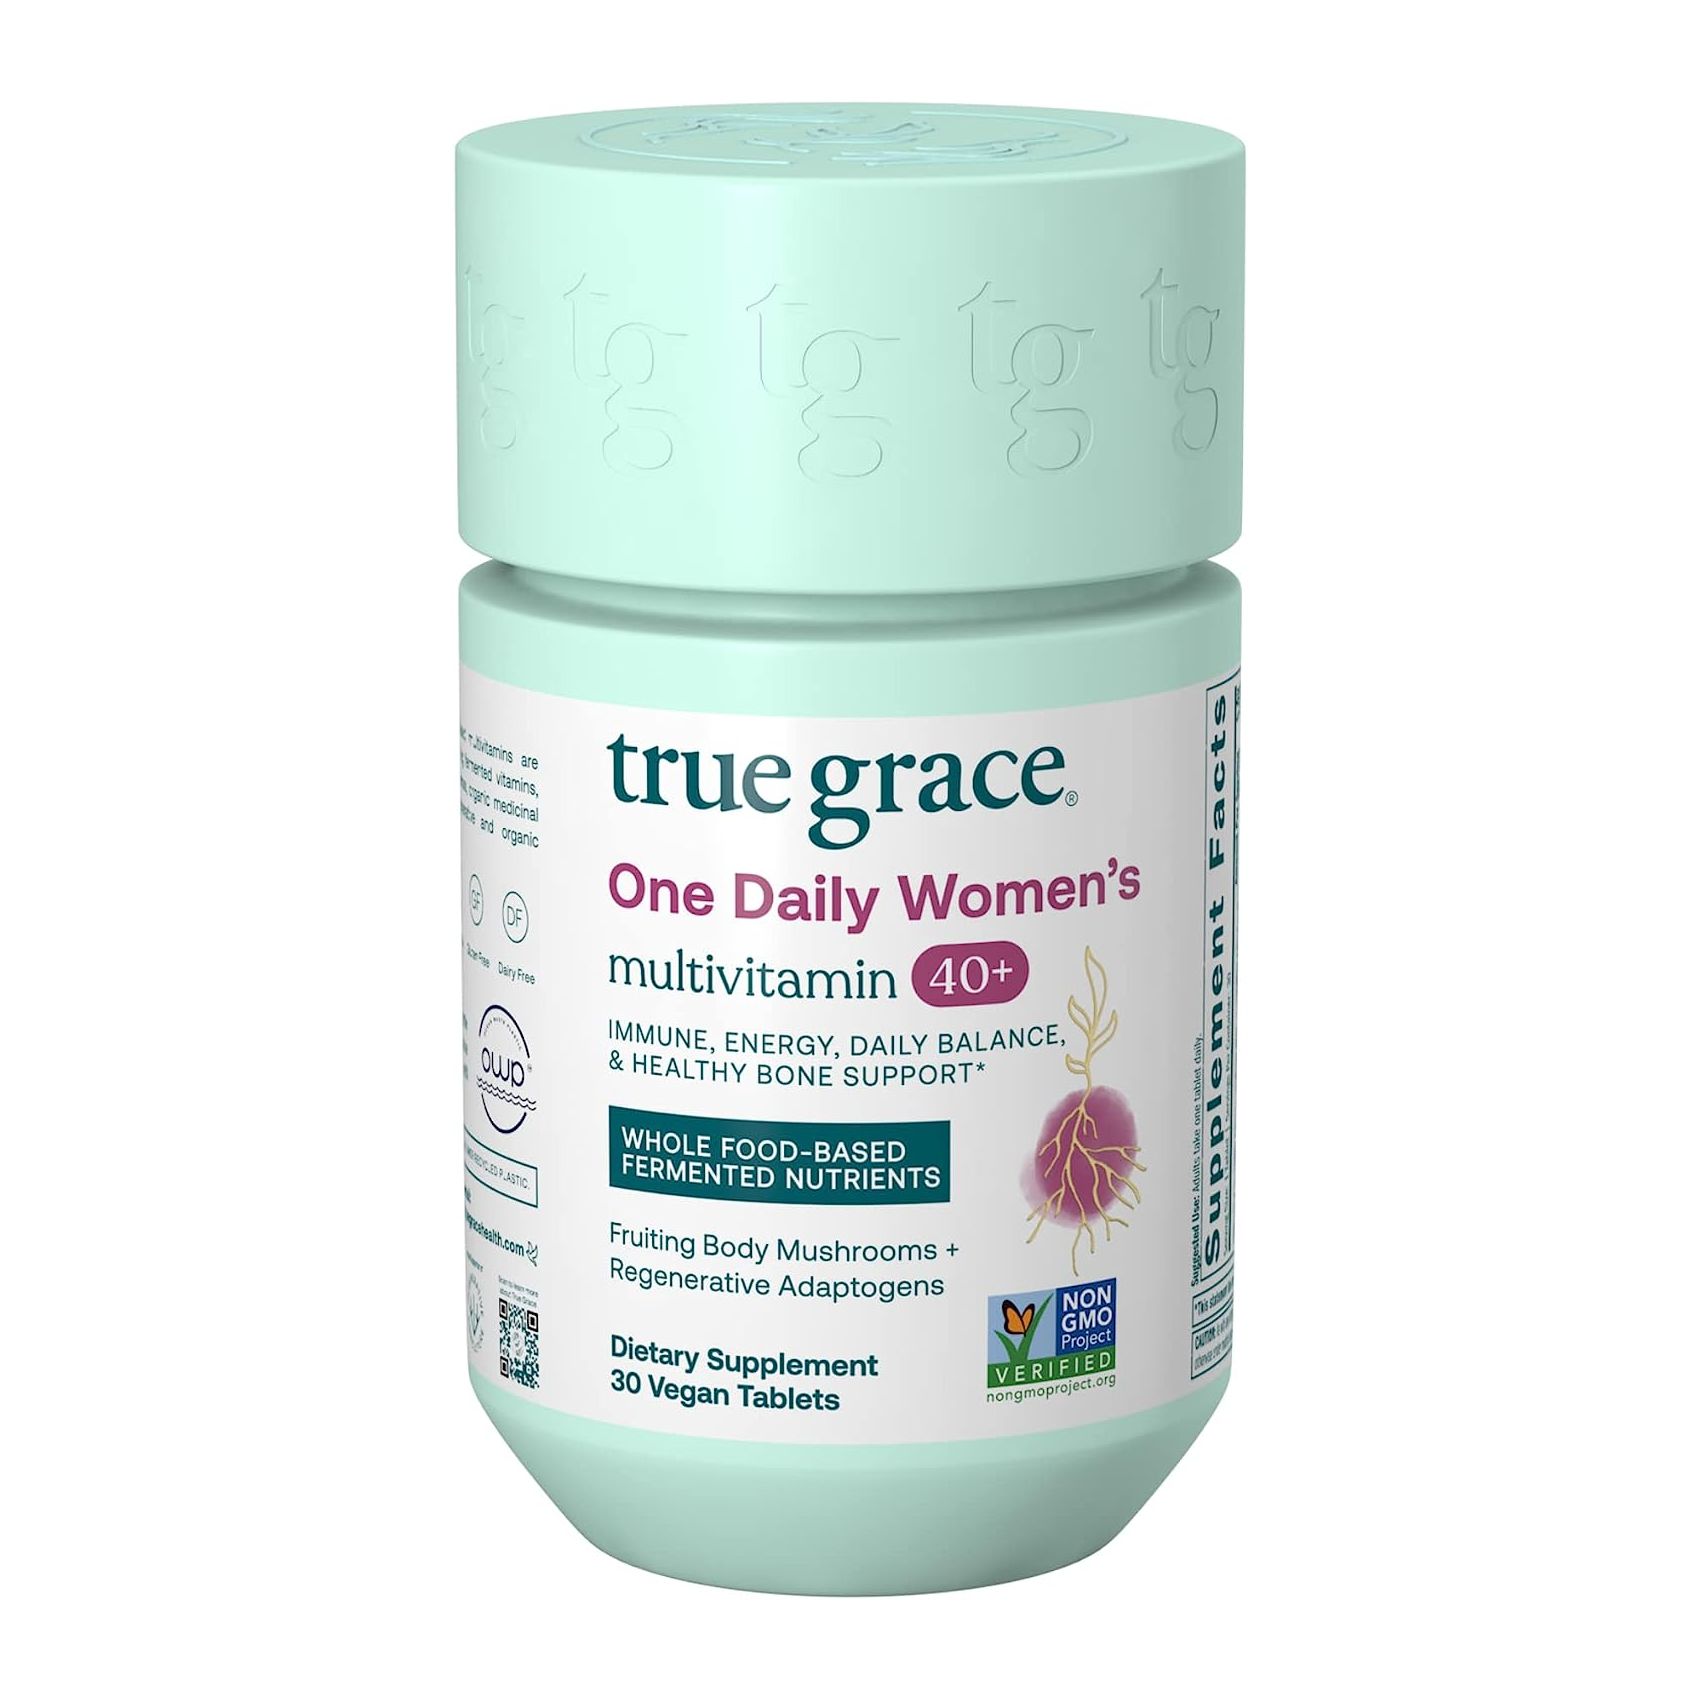 Мультивитамины True Grace One Daily Women’s 40+, 30 таблеток мультивитамины bronson one daily women’s 50 complete 180 таблеток